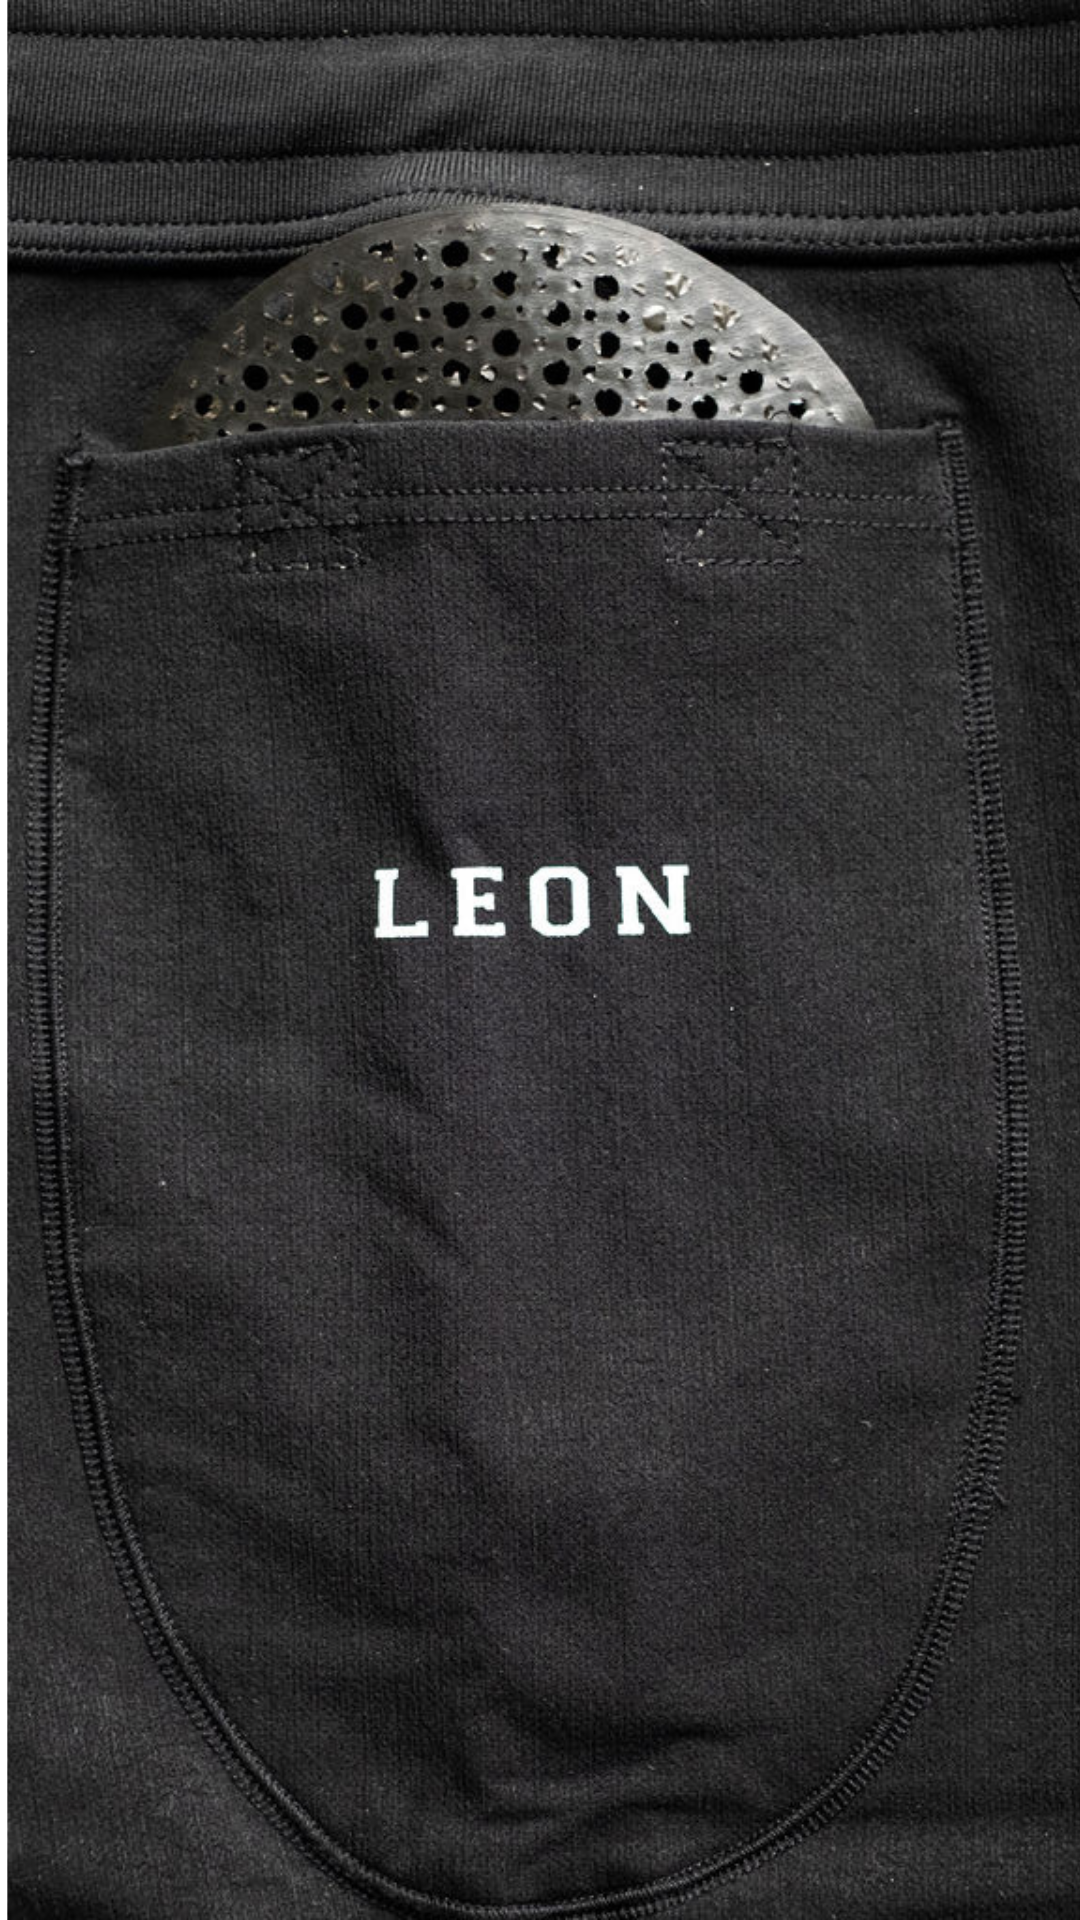 Nemean Clothing | The Leon - Protective Undergarment